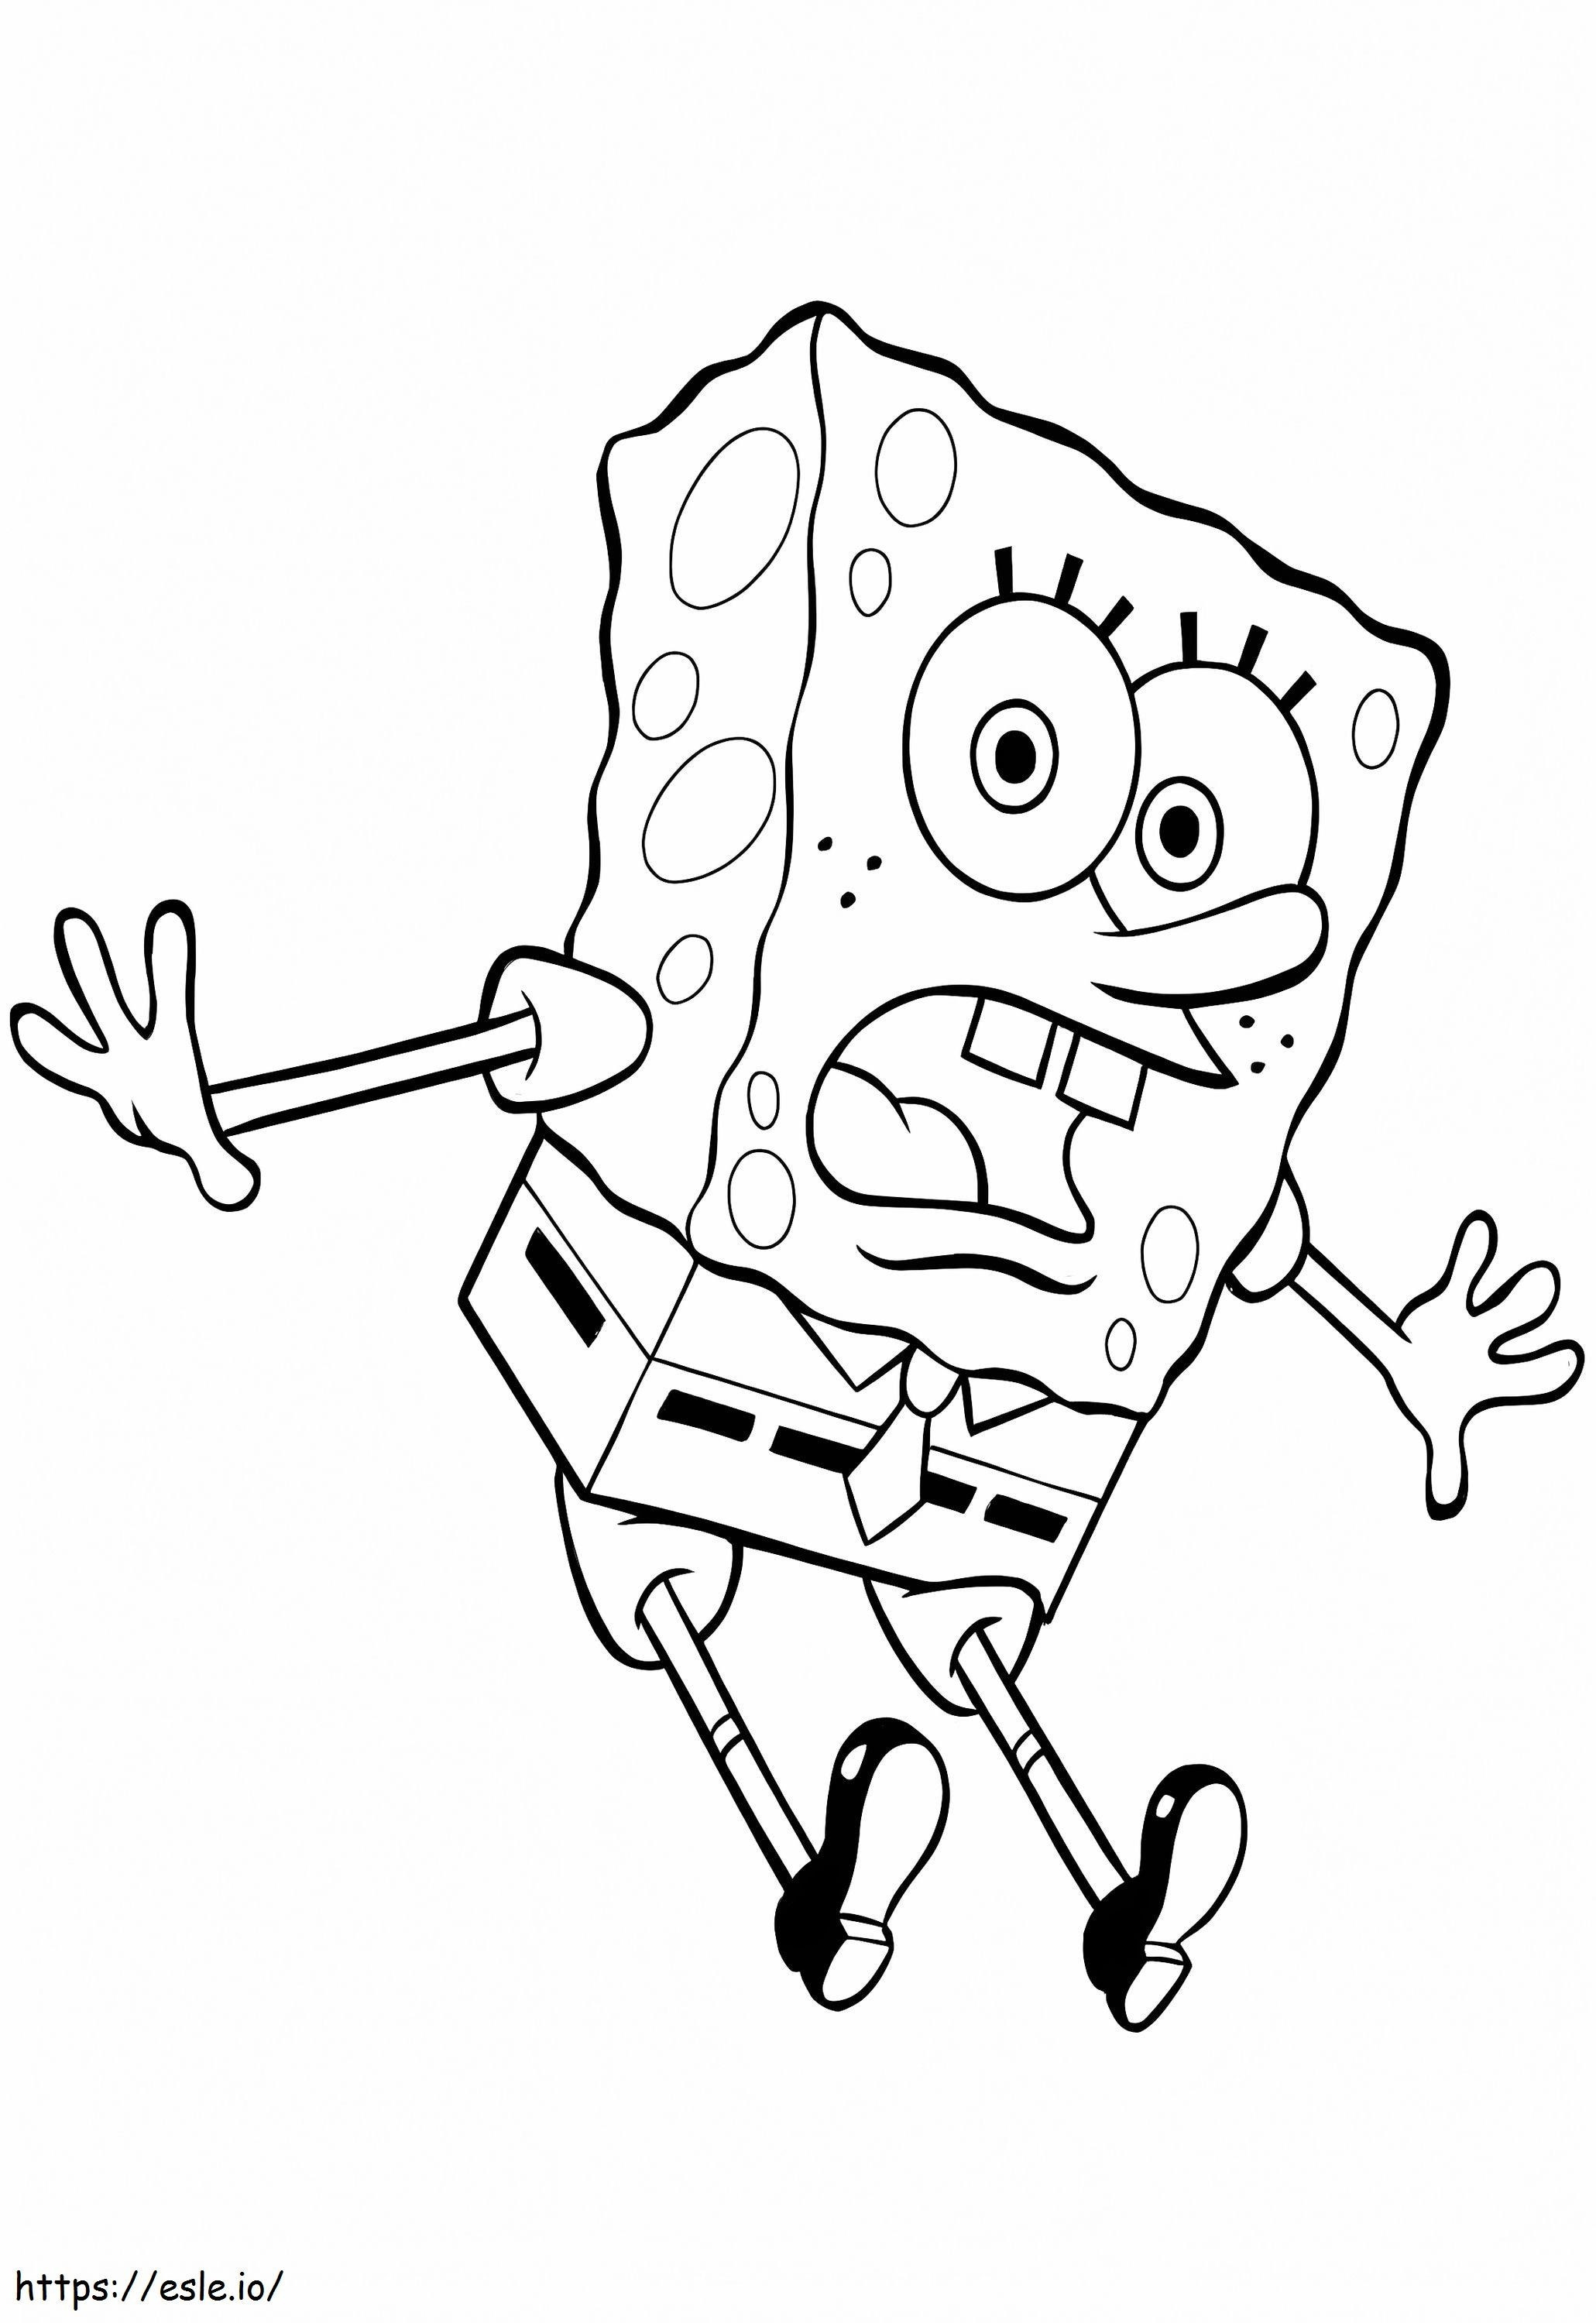 Spongebob terkejut Gambar Mewarnai